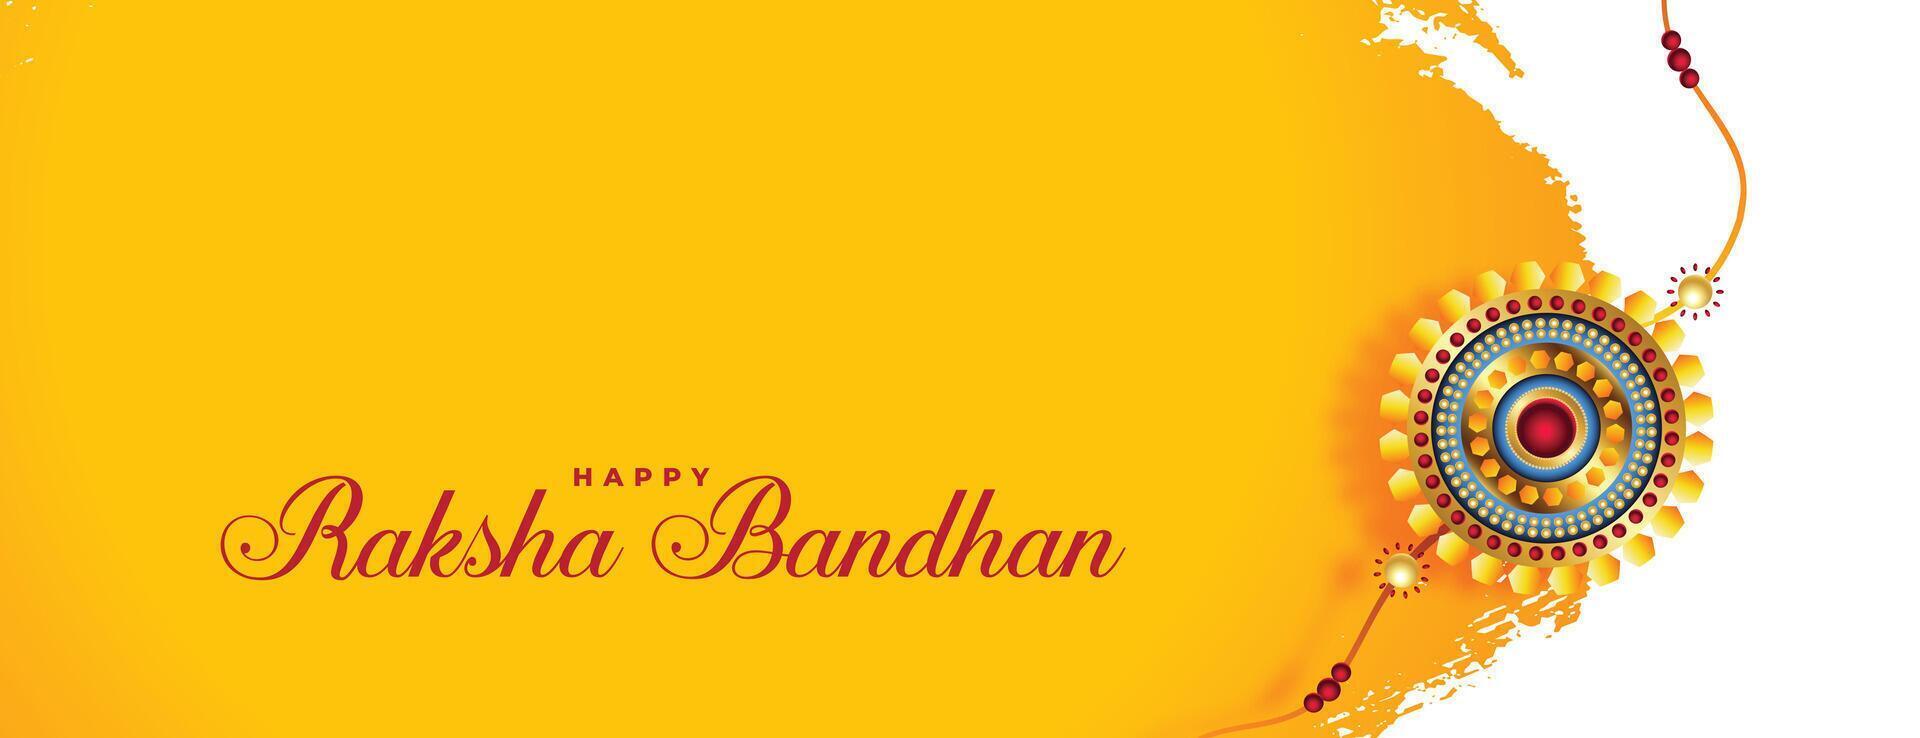 beautiful raksha bandhan banner with golden rakhi vector